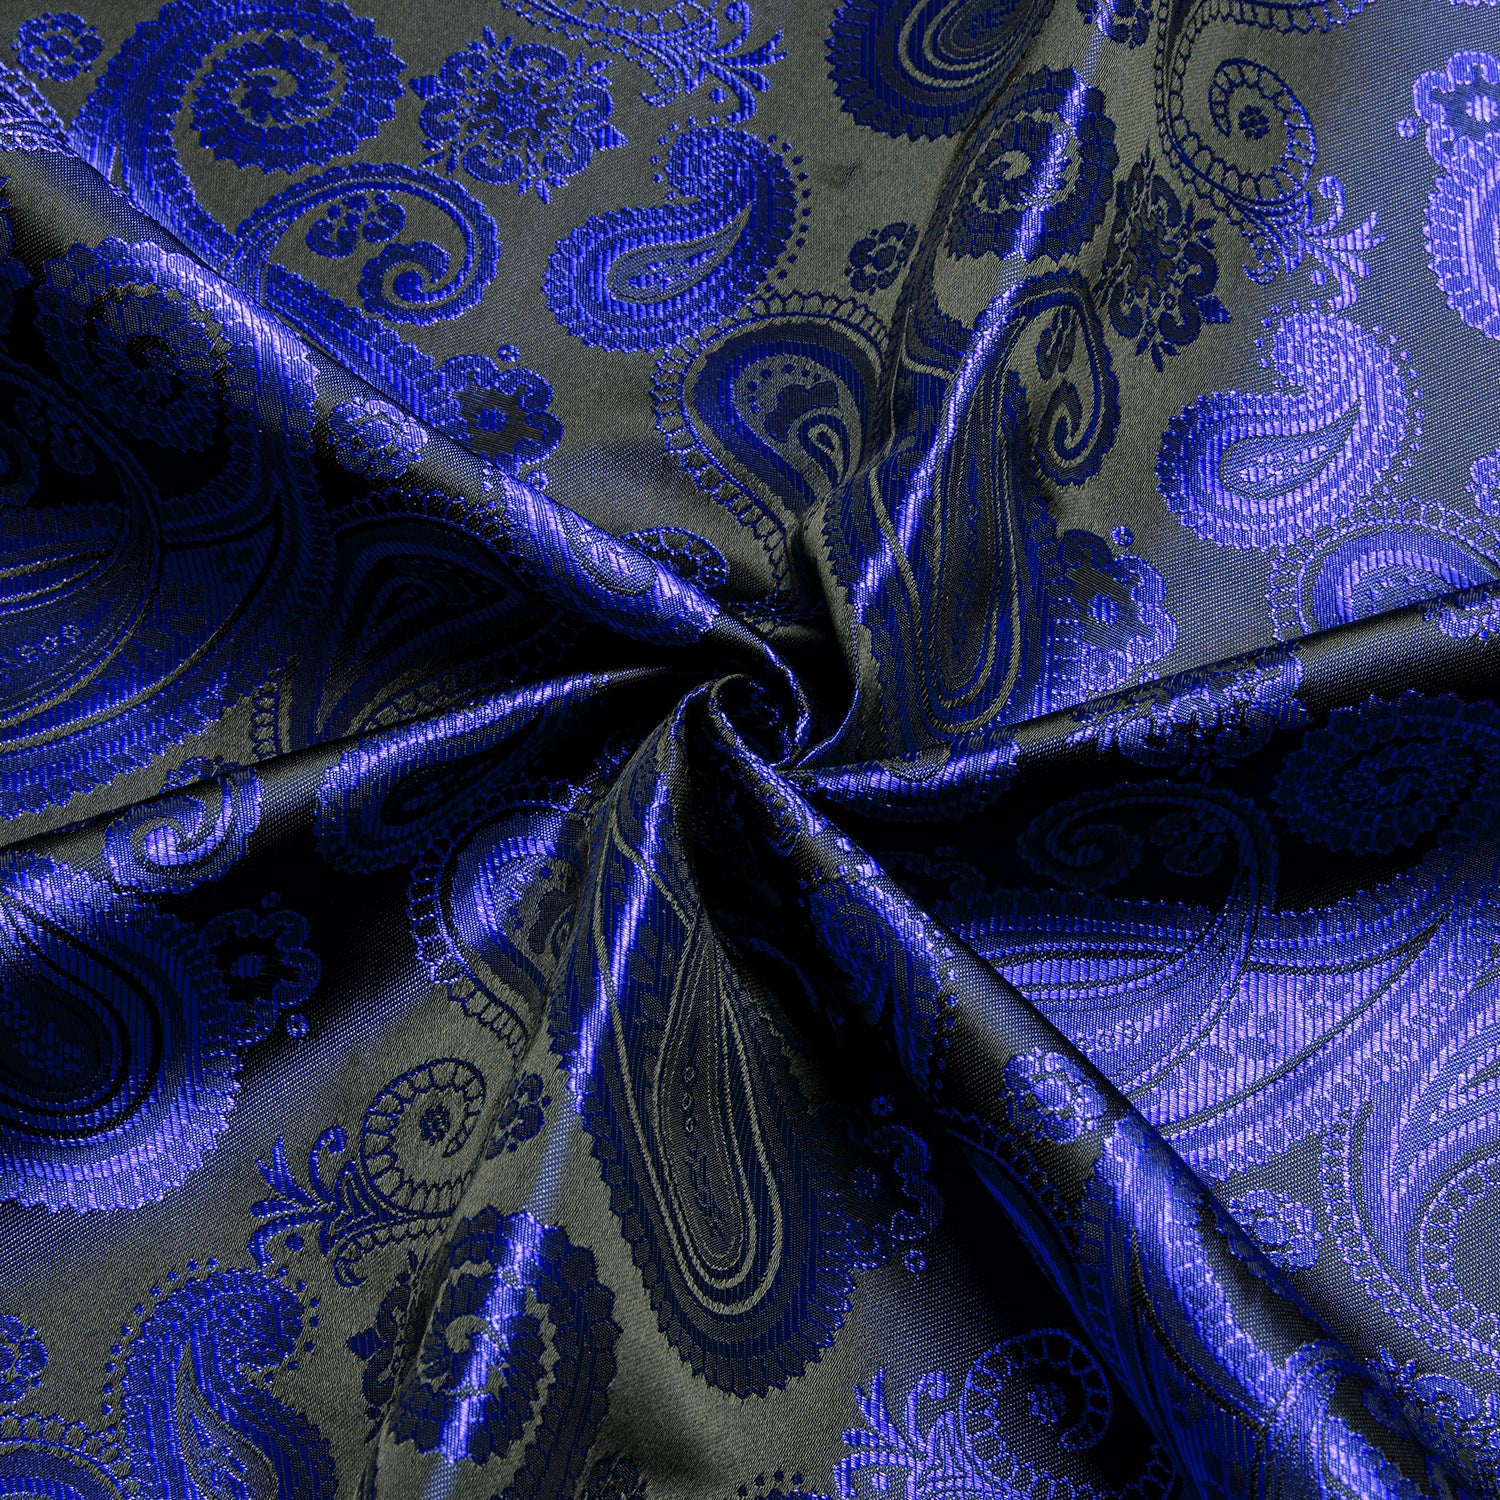 Royal Blue Black Paisley Silk Men's Long Sleeve Shirt Casual